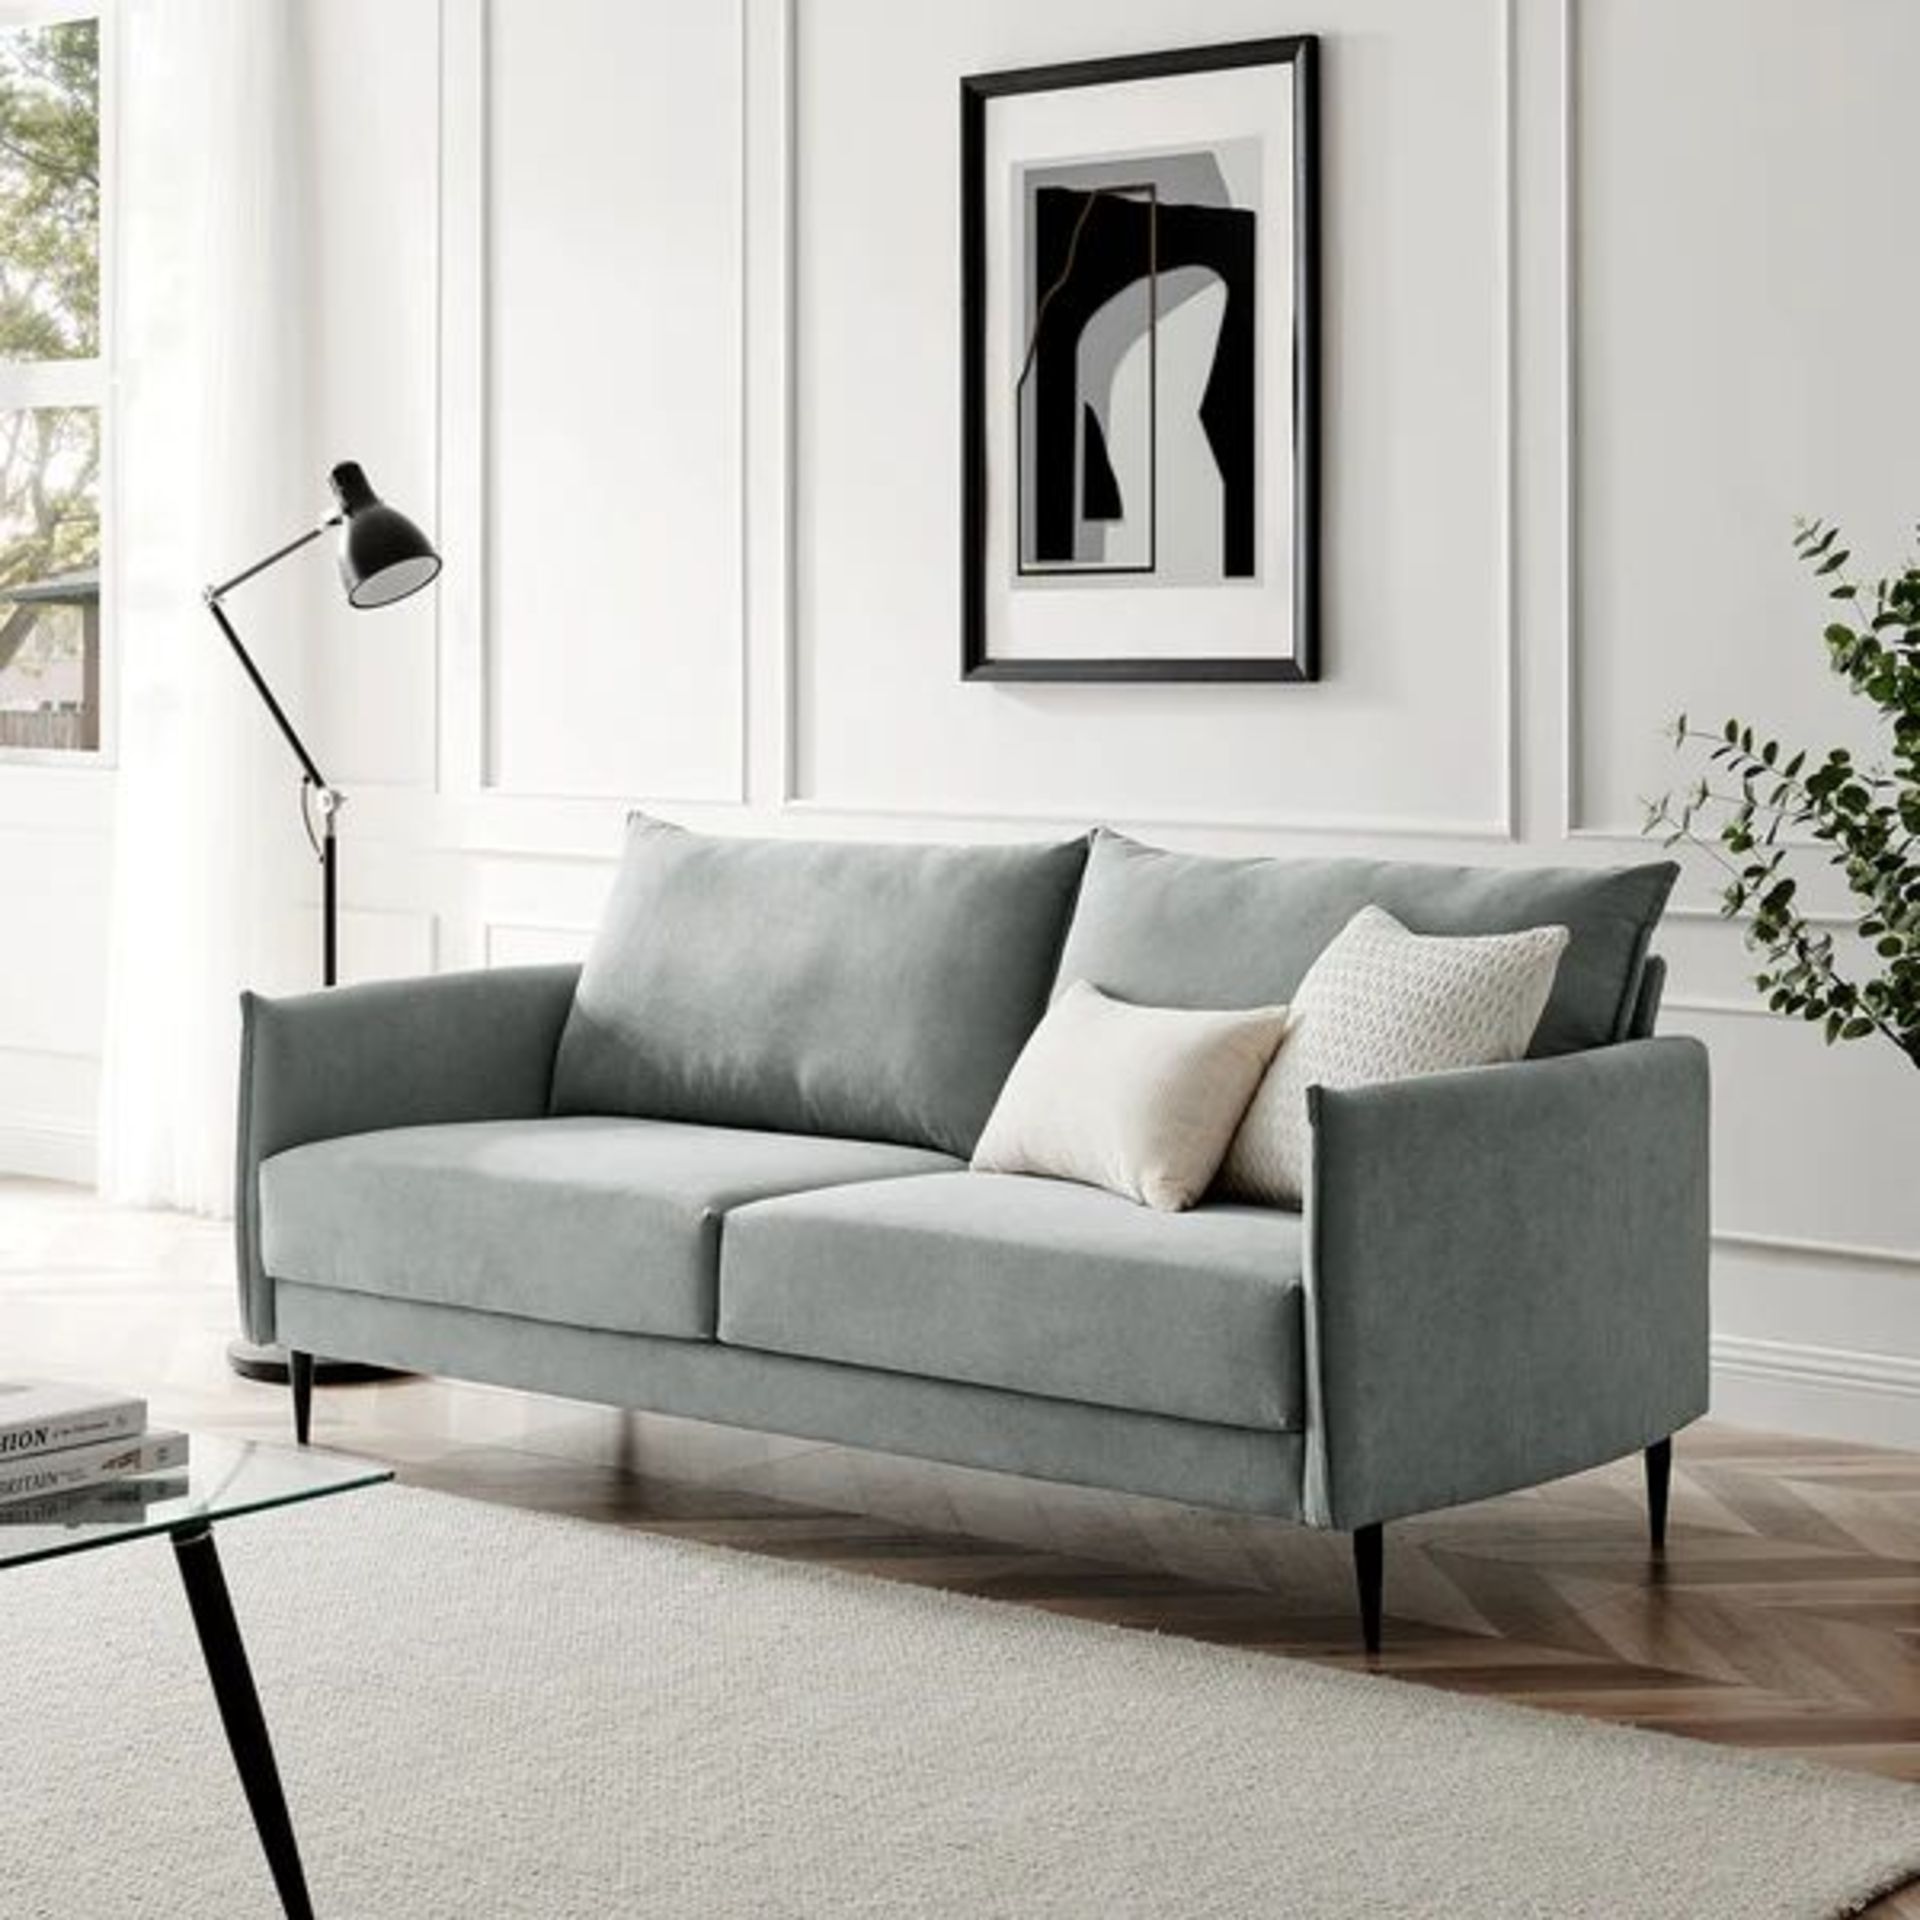 3 Seater Bari Light Grey Brushed Fabric Sofa. - SR5. RRP £519.99. Our Bari sofa features a sleek and - Image 2 of 2